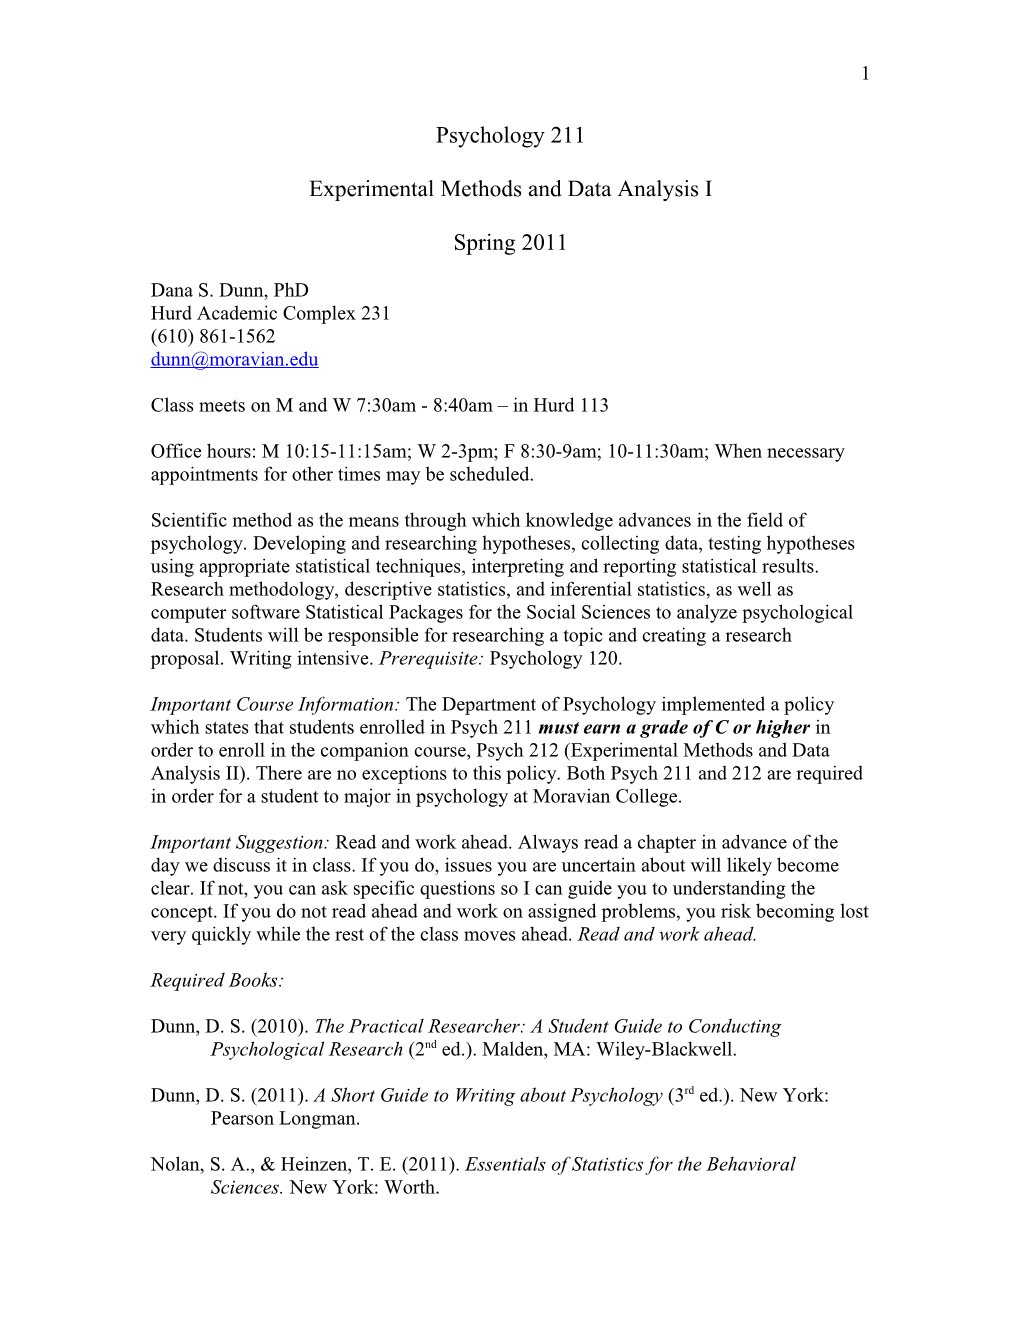 Experimental Methods and Data Analysis I